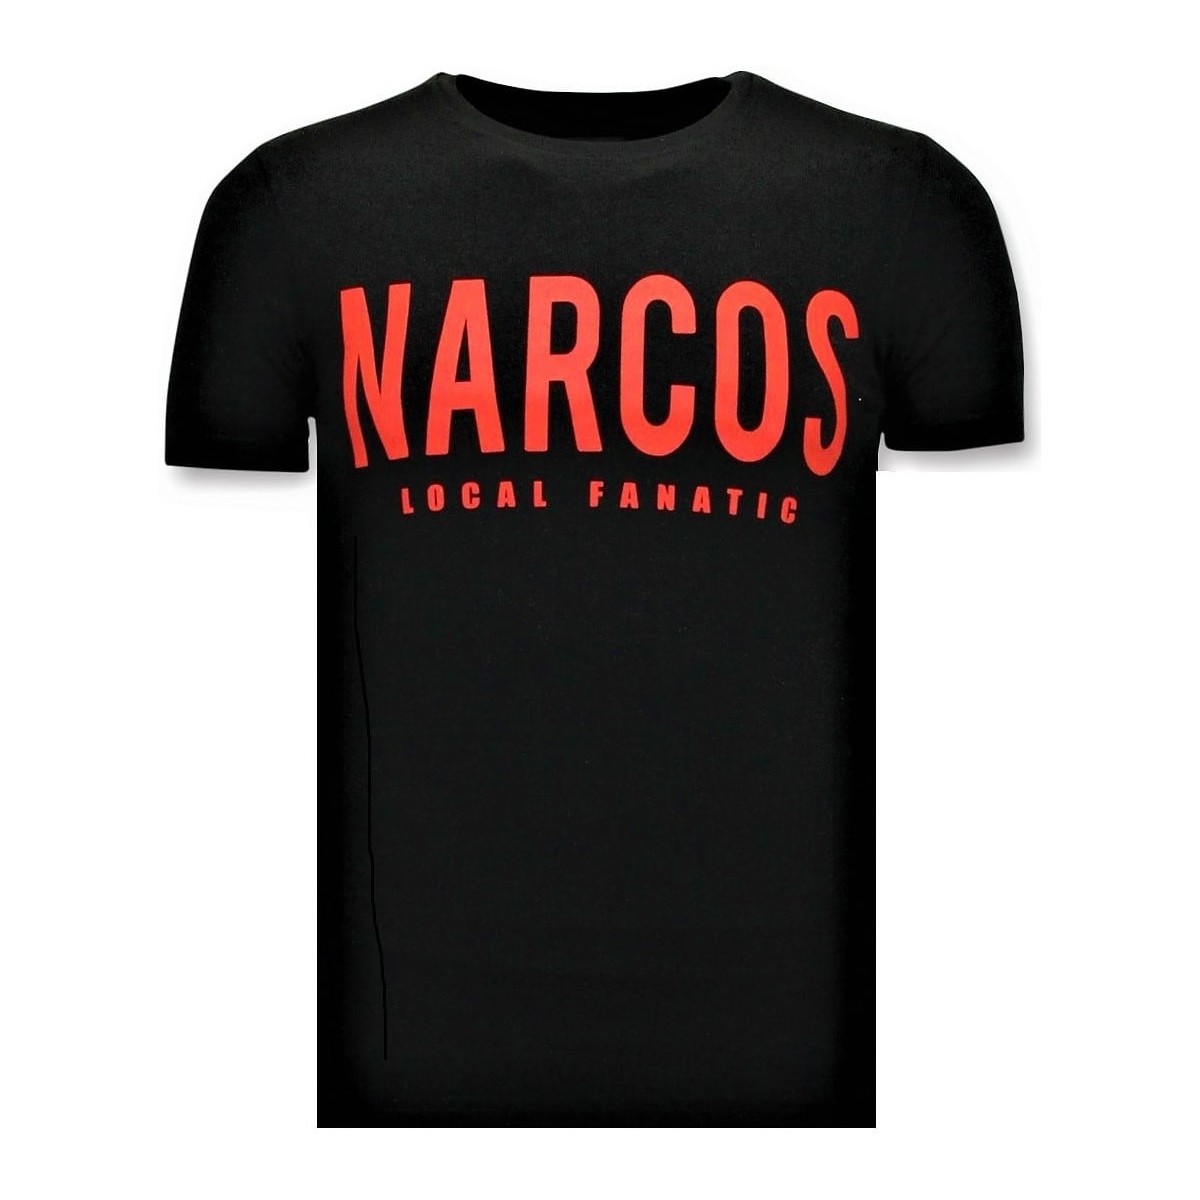 textil Herr T-shirts Local Fanatic Narcos Pablo Escobar Svart